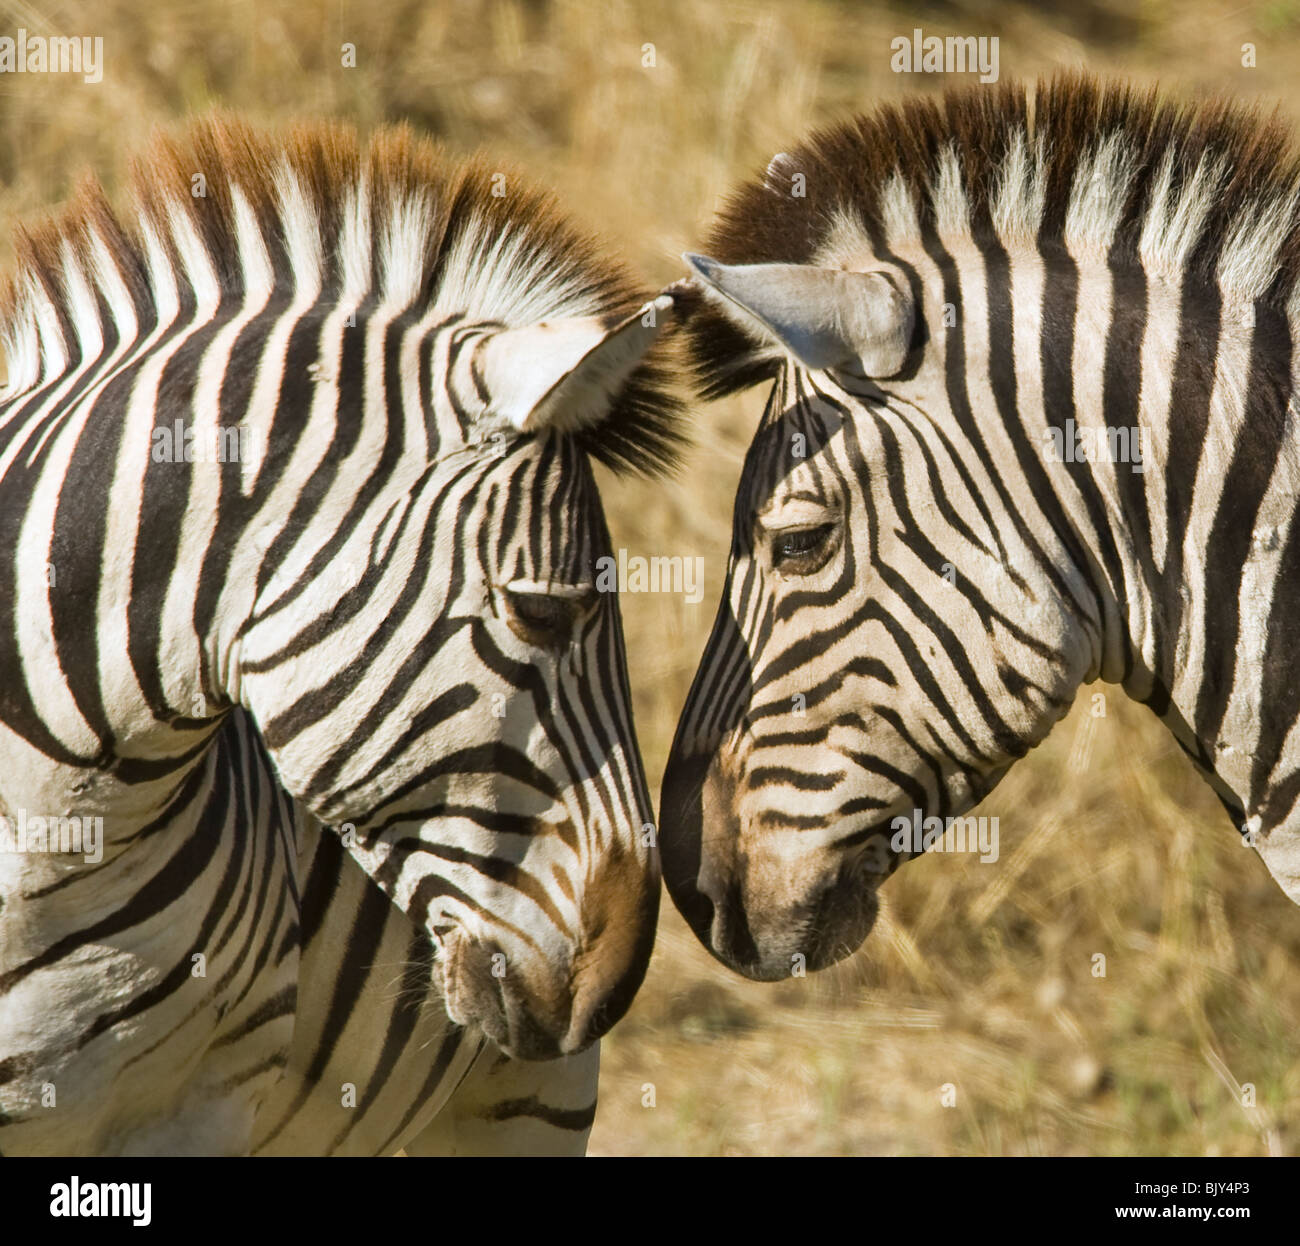 Zebras nuzzling Stock Photo